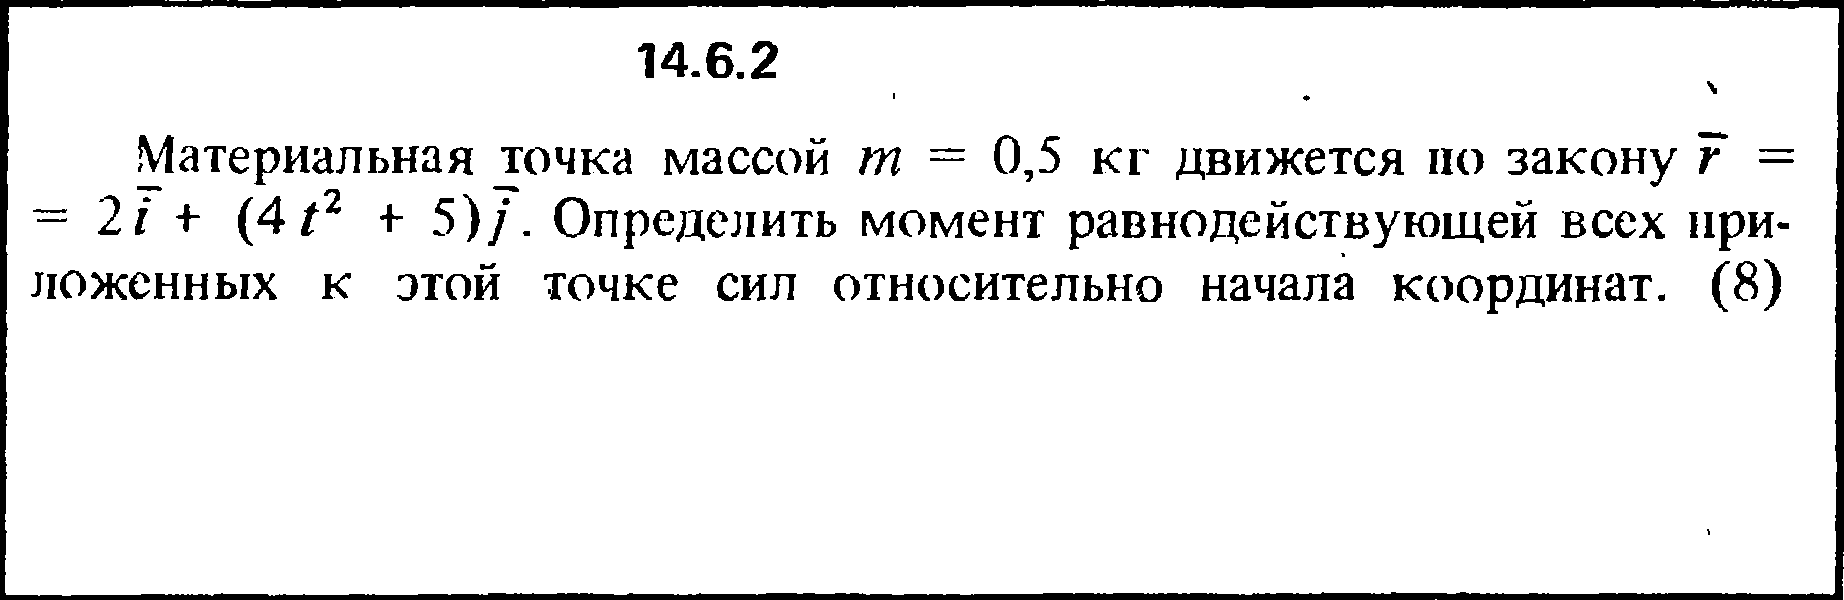 Решение задачи 14.6.2 из сборника Кепе О.Е. 1989 года